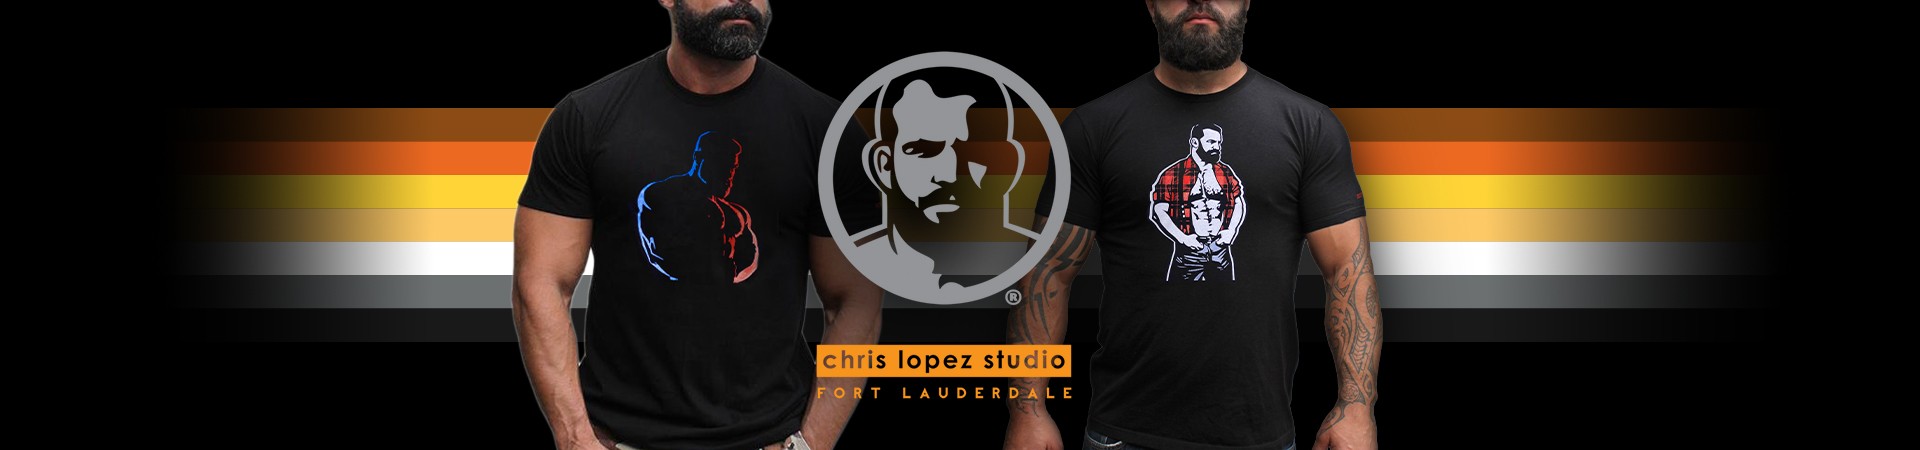 Chris Lopez